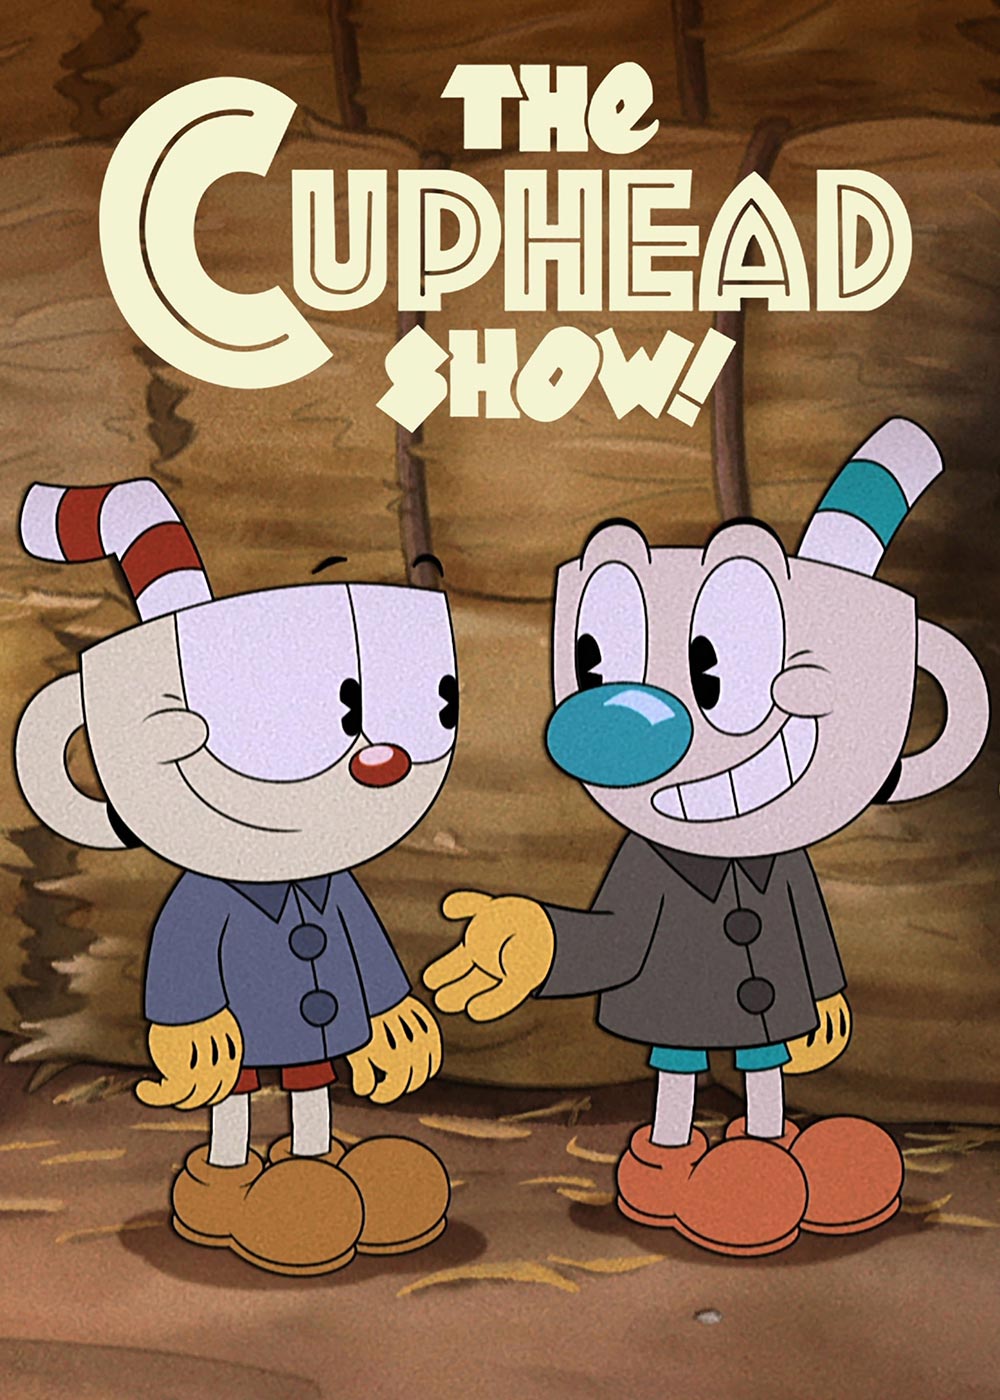 The Cuphead Show Season 4 ON NETFLIX! 